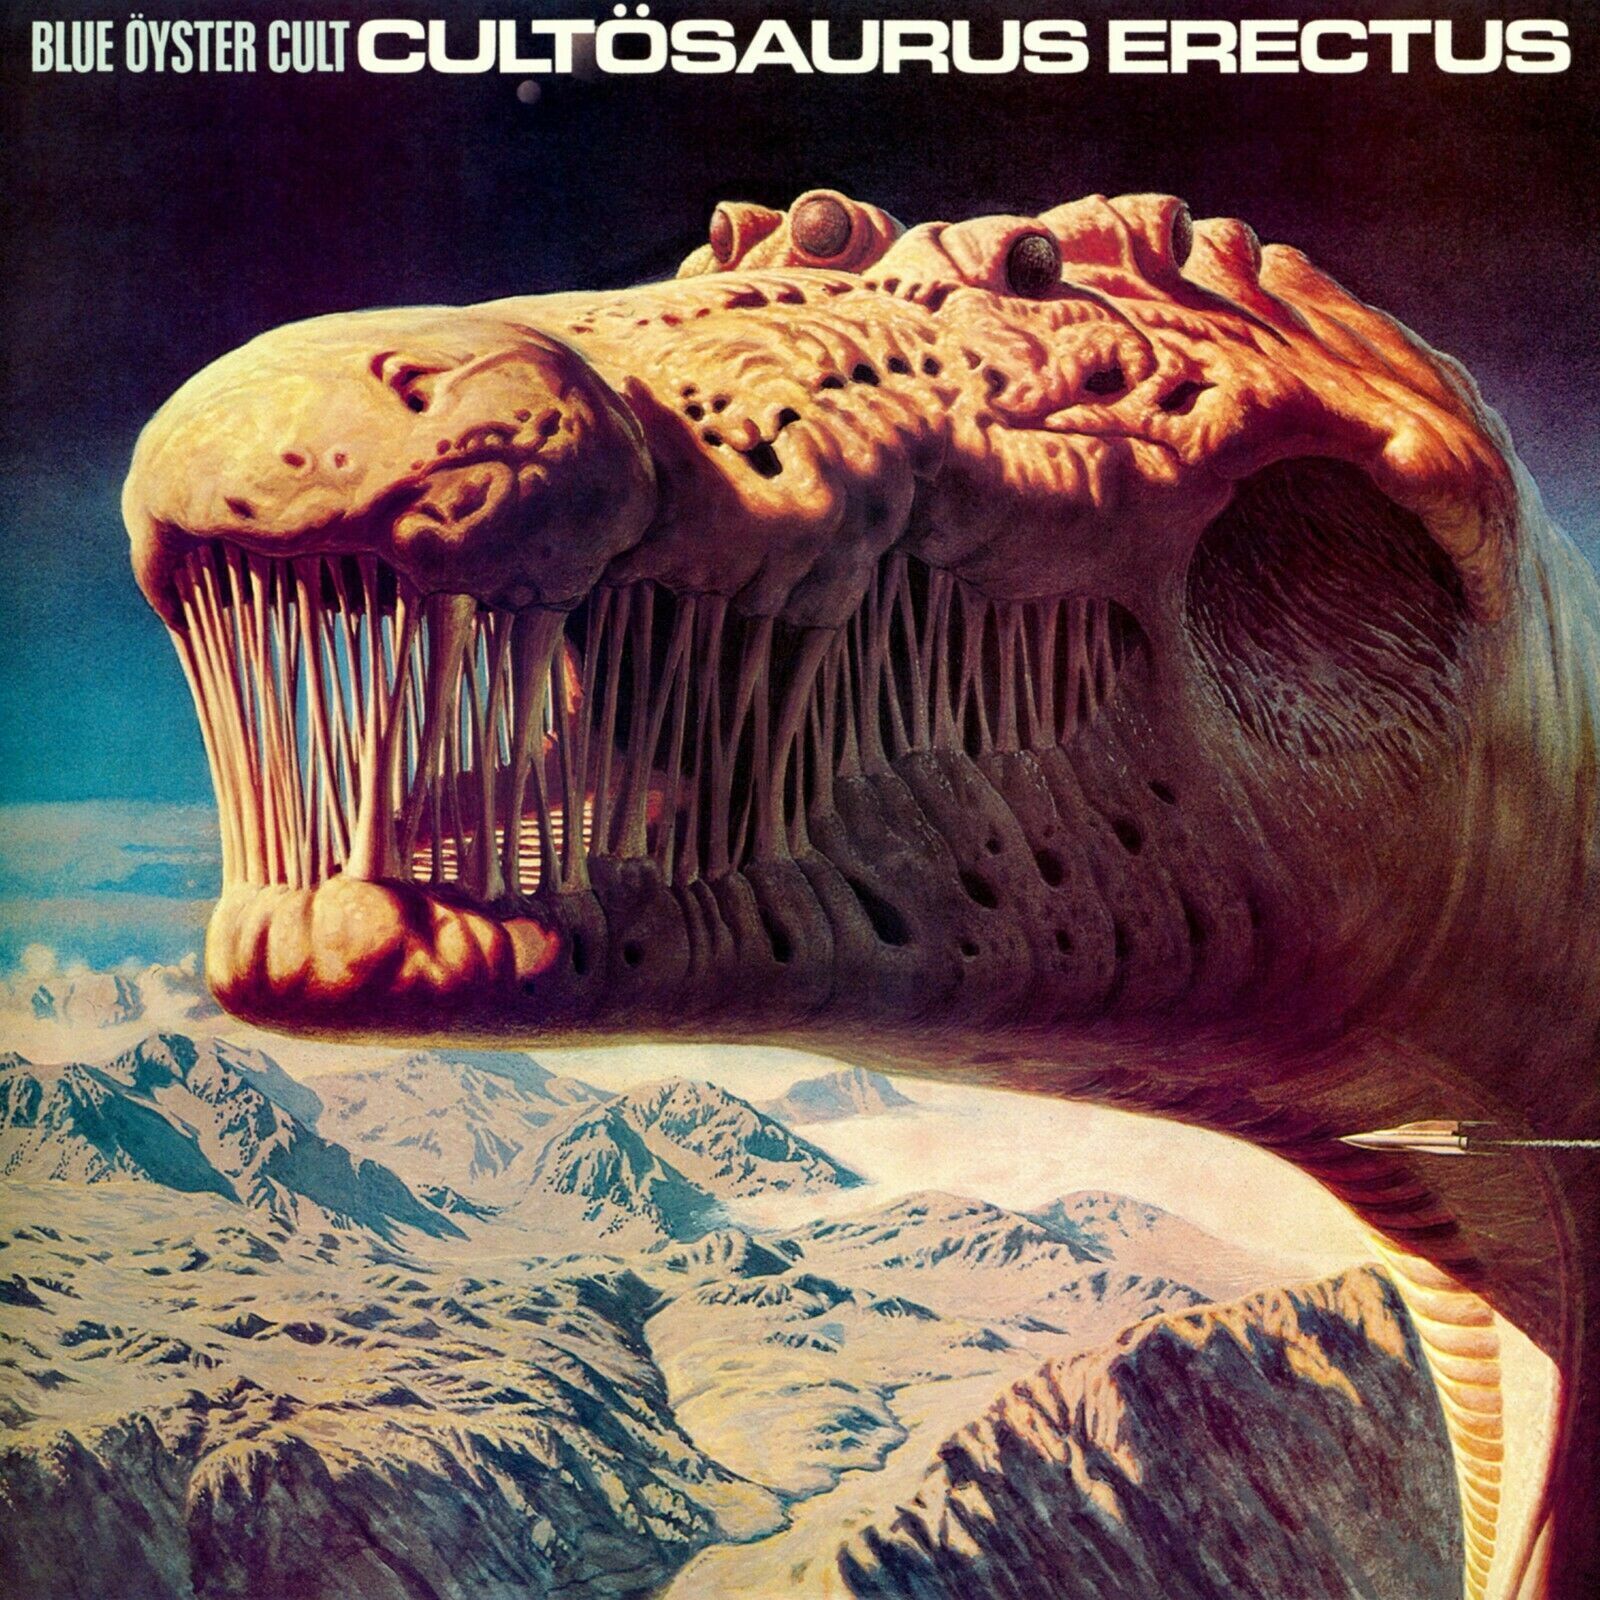 Cultosaurus erectus cover.jpg